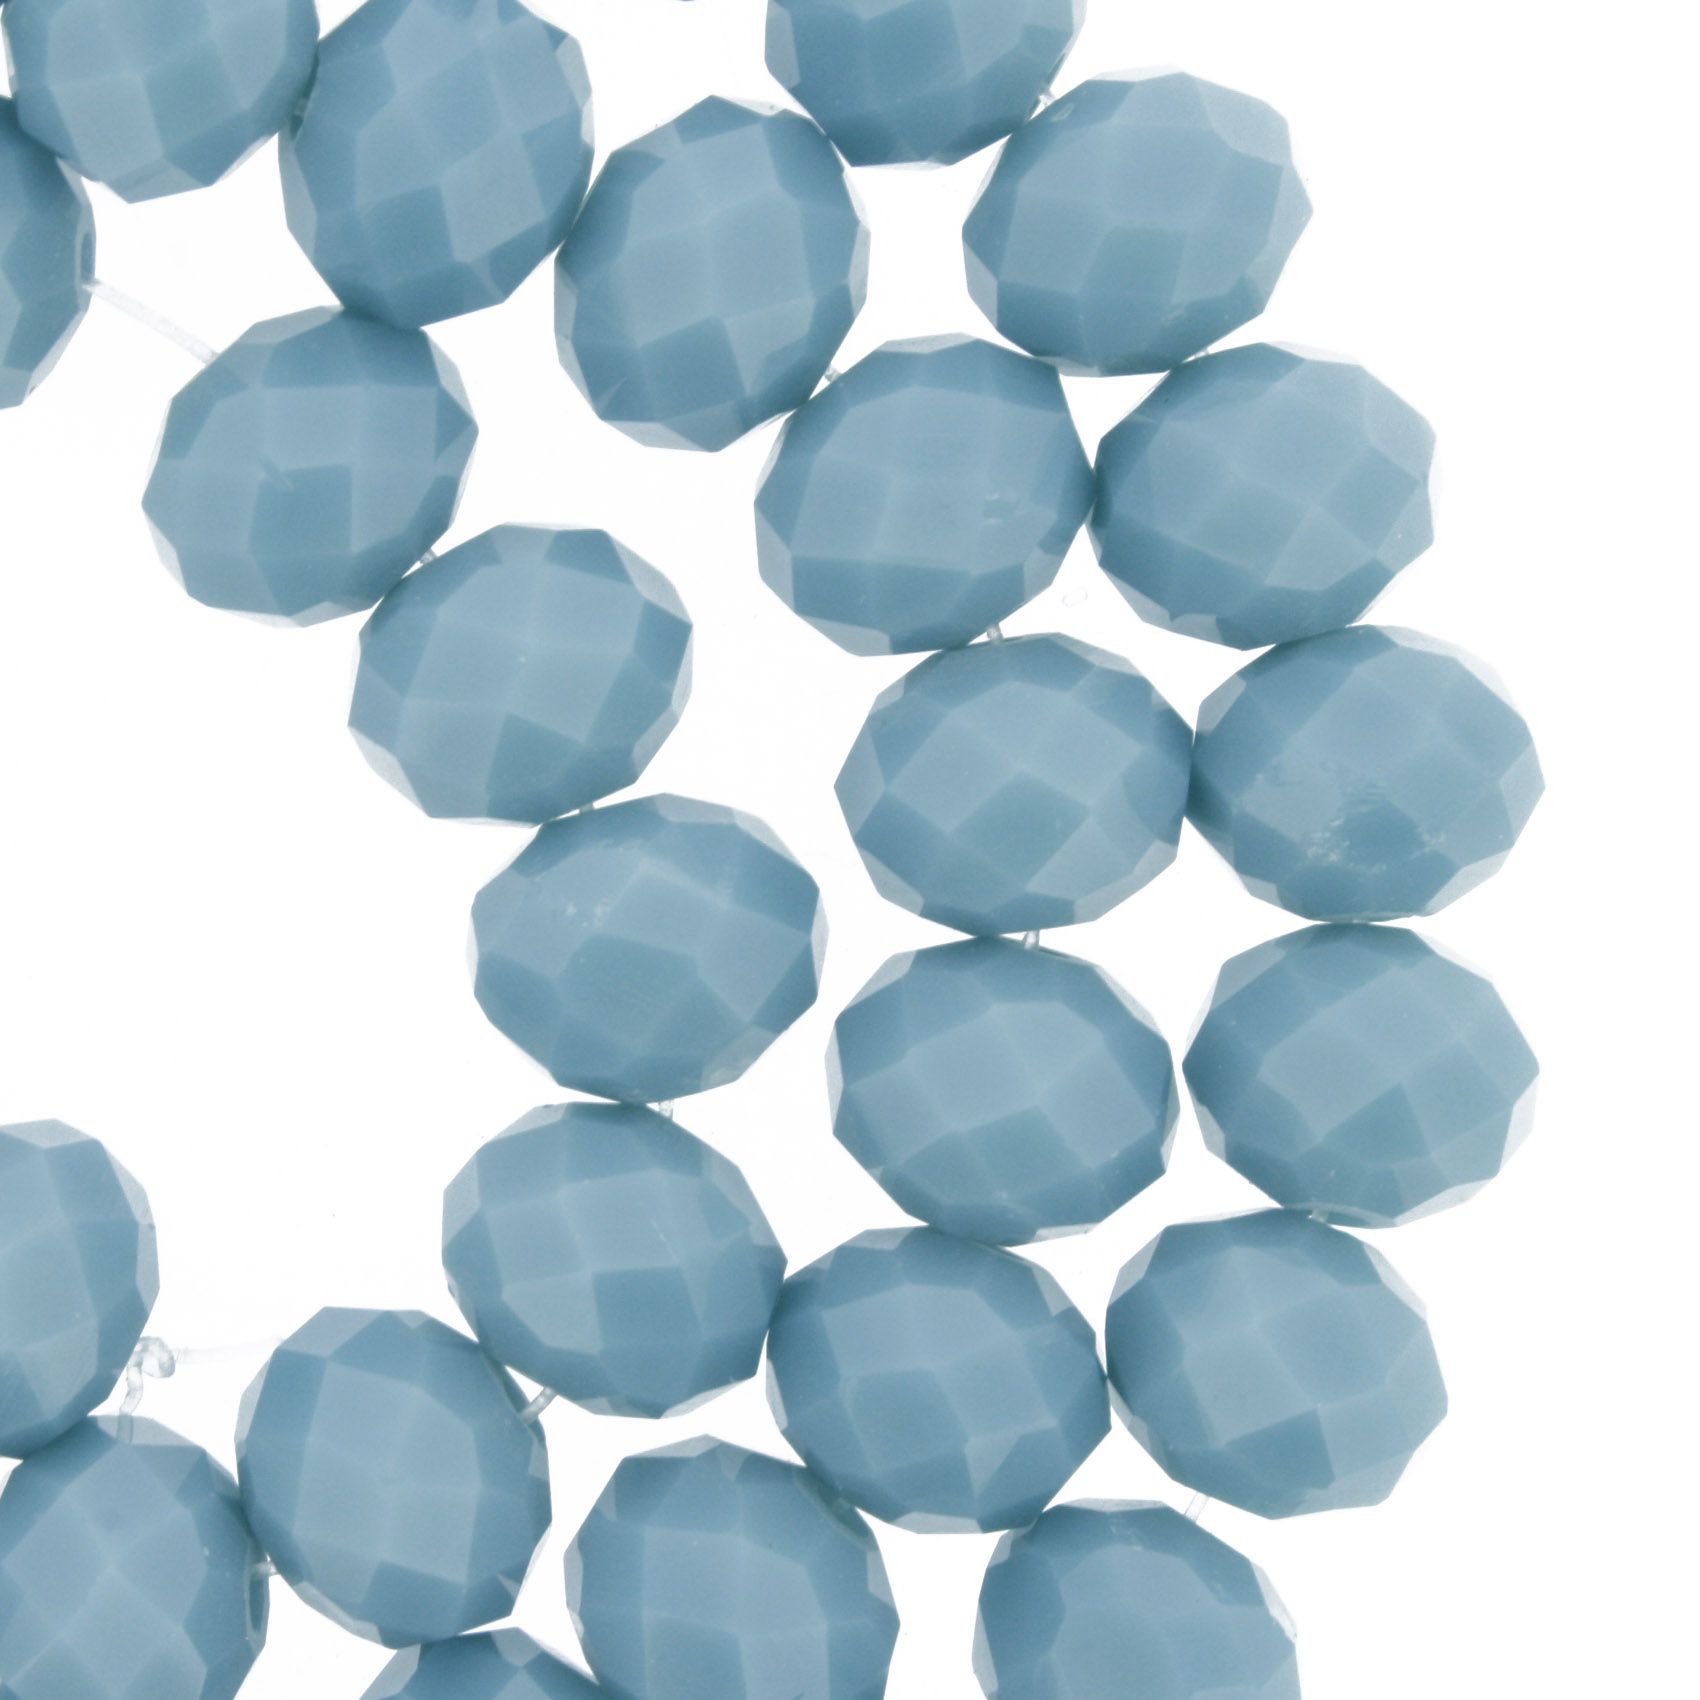 Fio de Cristal - Flat® - Azul Tiffany - 10mm  - Stéphanie Bijoux® - Peças para Bijuterias e Artesanato